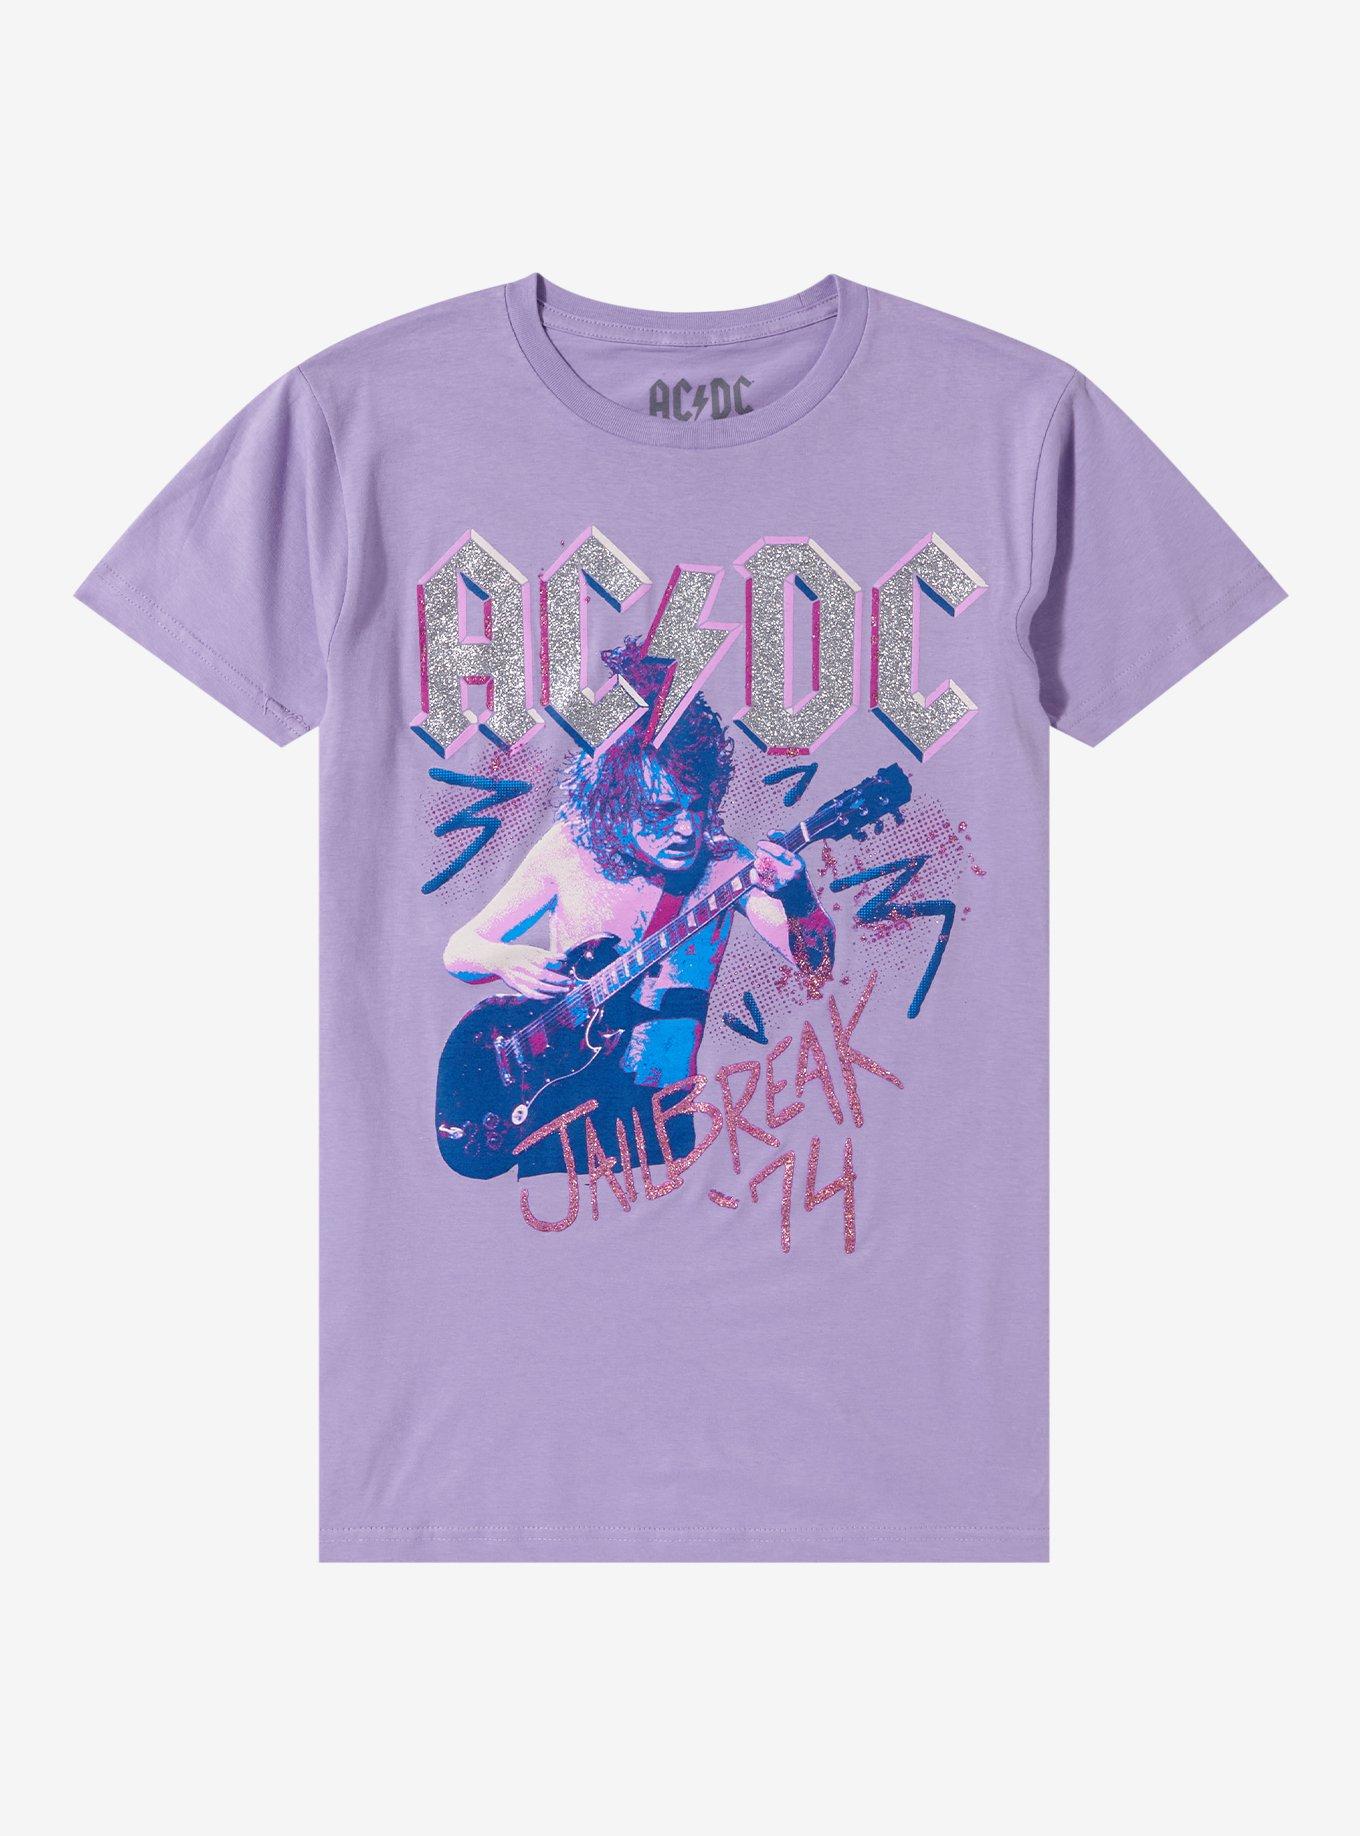 AC/DC Jailbreak '74 Glitter Boyfriend Fit Girls T-Shirt, LAVENDER, hi-res